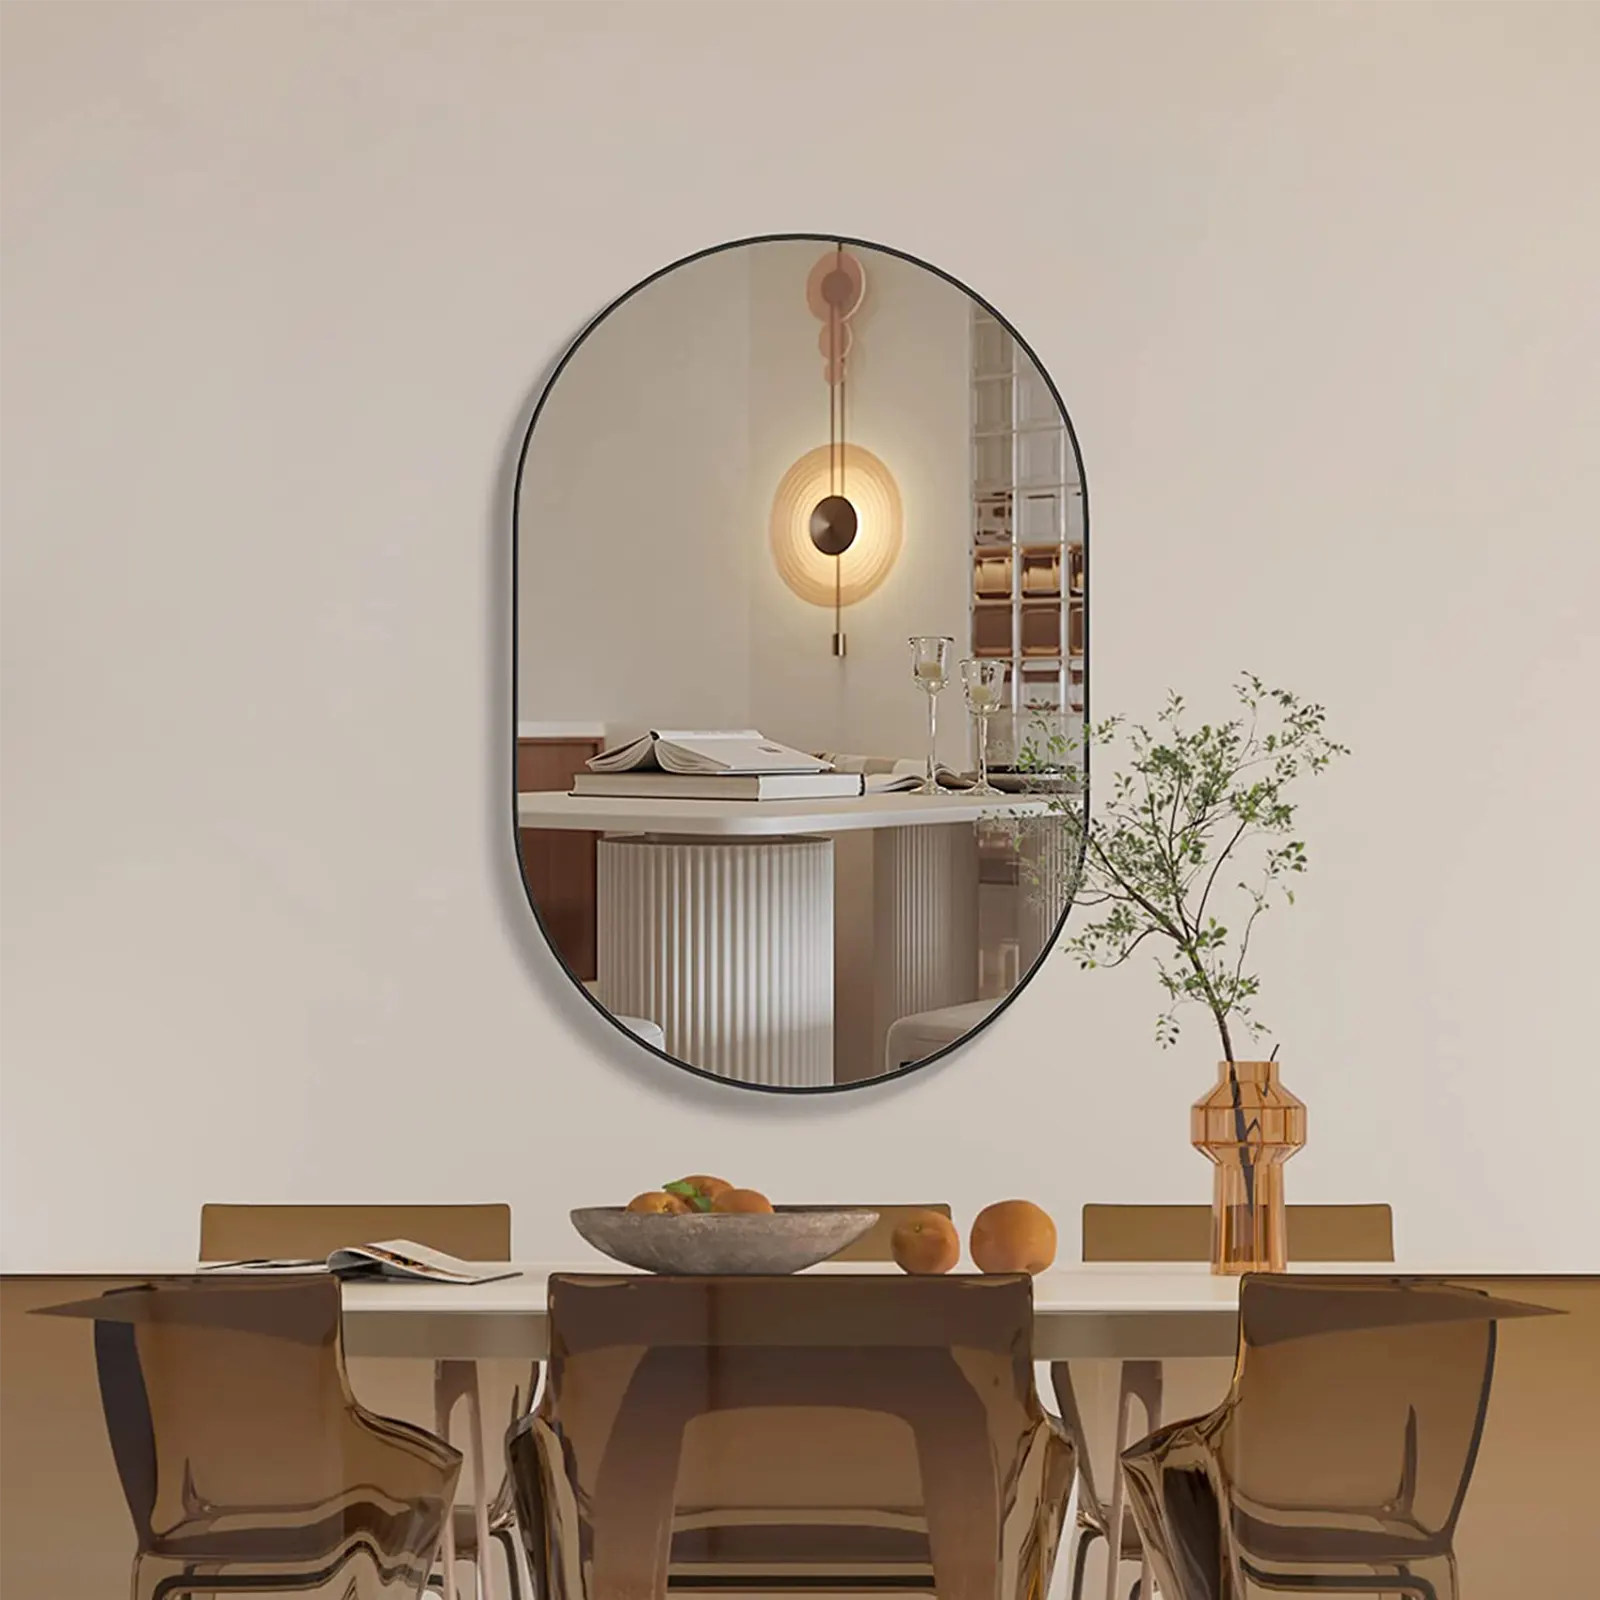 Oval Mirror, Round Mirror, Metal Frame Mirror, Hang Horizontally or Vertically Unique Wall Mounted Mirror, Golden Vanity Mirror for Living Room, Bathroom, Bedroom, Entryway